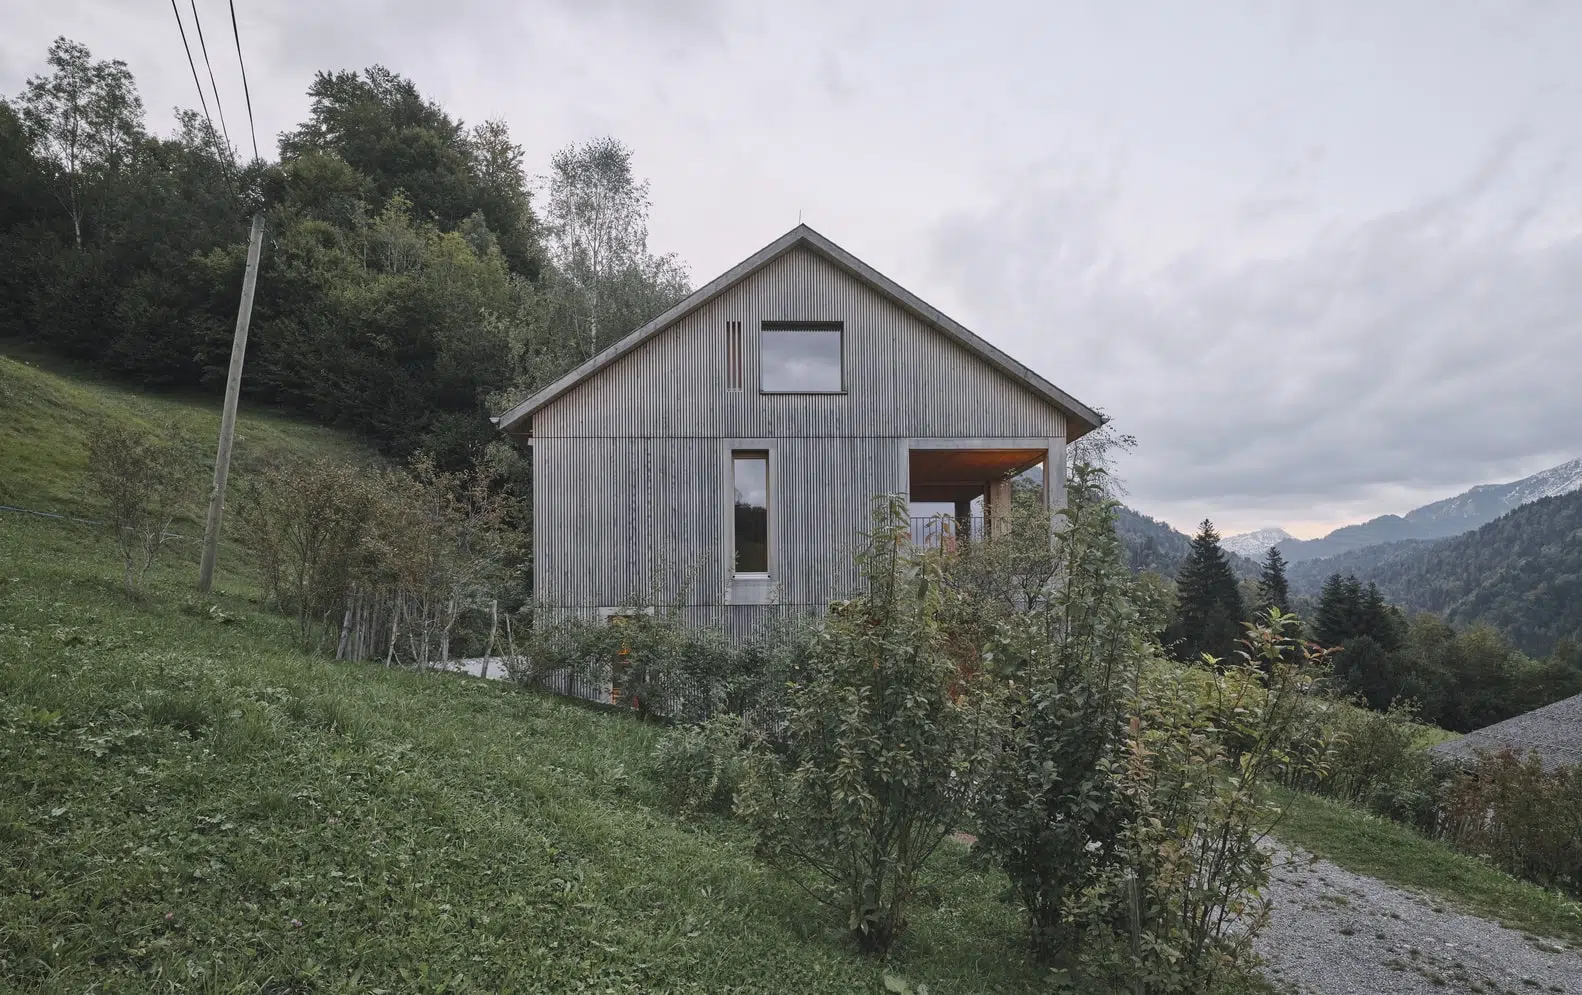 Wohnhaus Hittisau w górzystym regionie Austrii by Klumpp + Klumpp Architecten in Austria